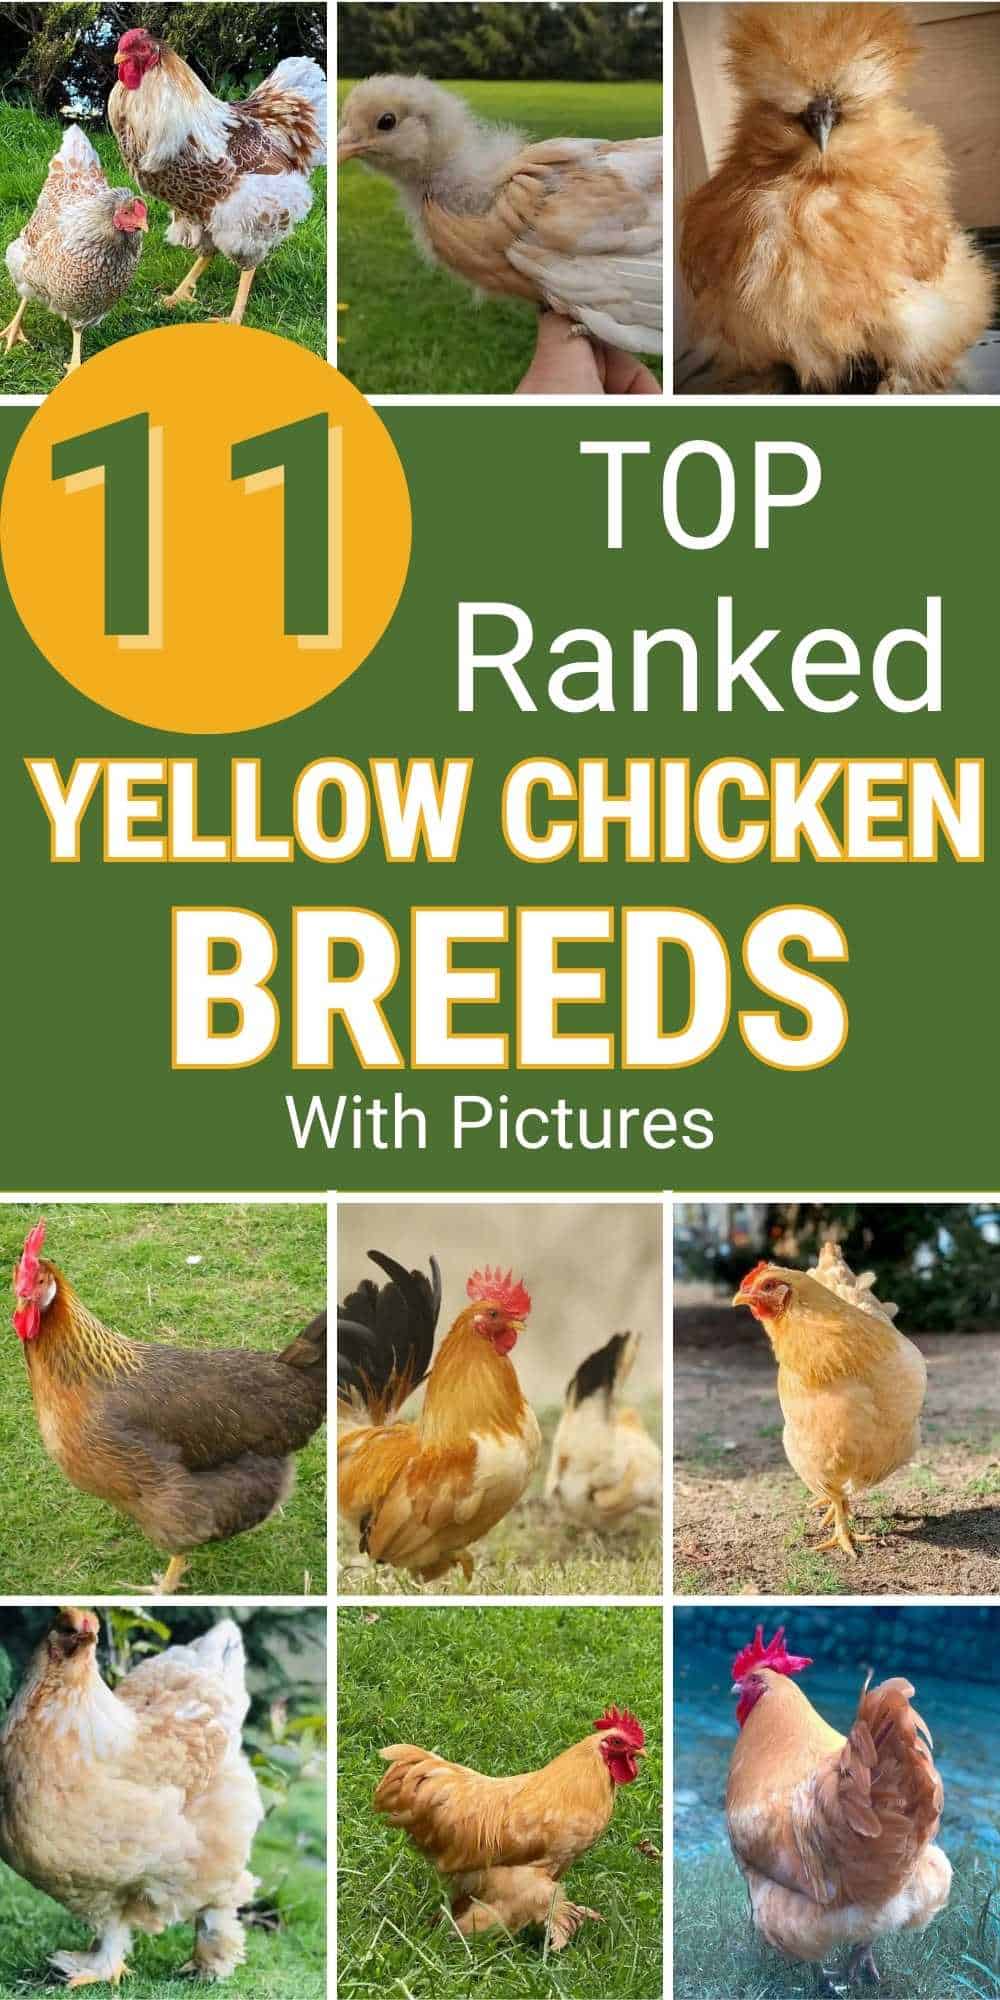 Yellow Chickens